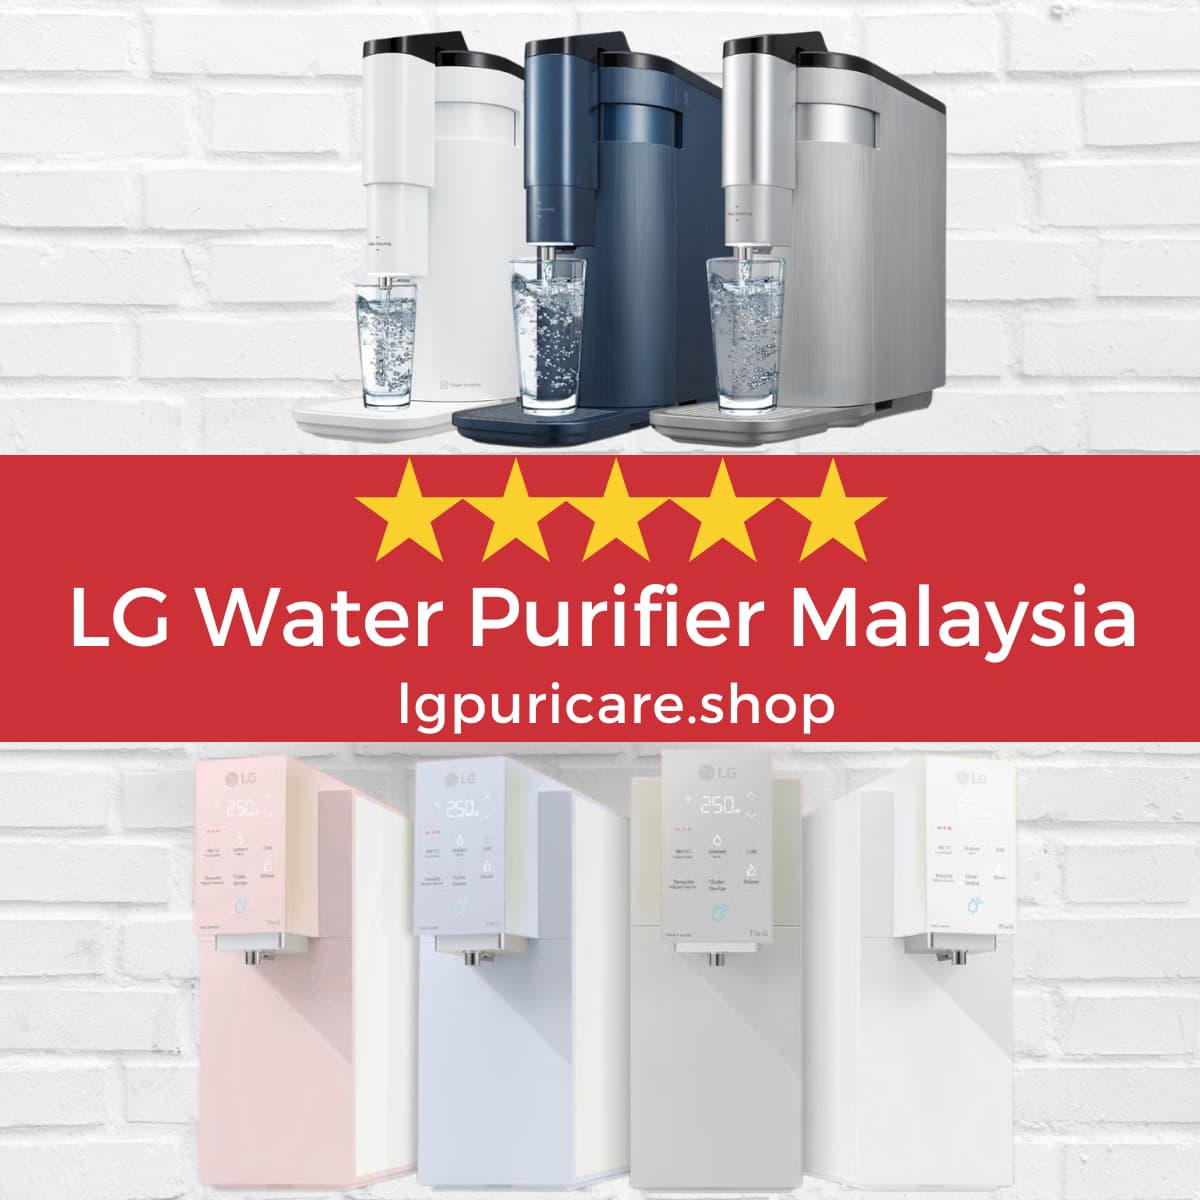 LG Water Purifier Malaysia -Model WD516AN & WD518AN